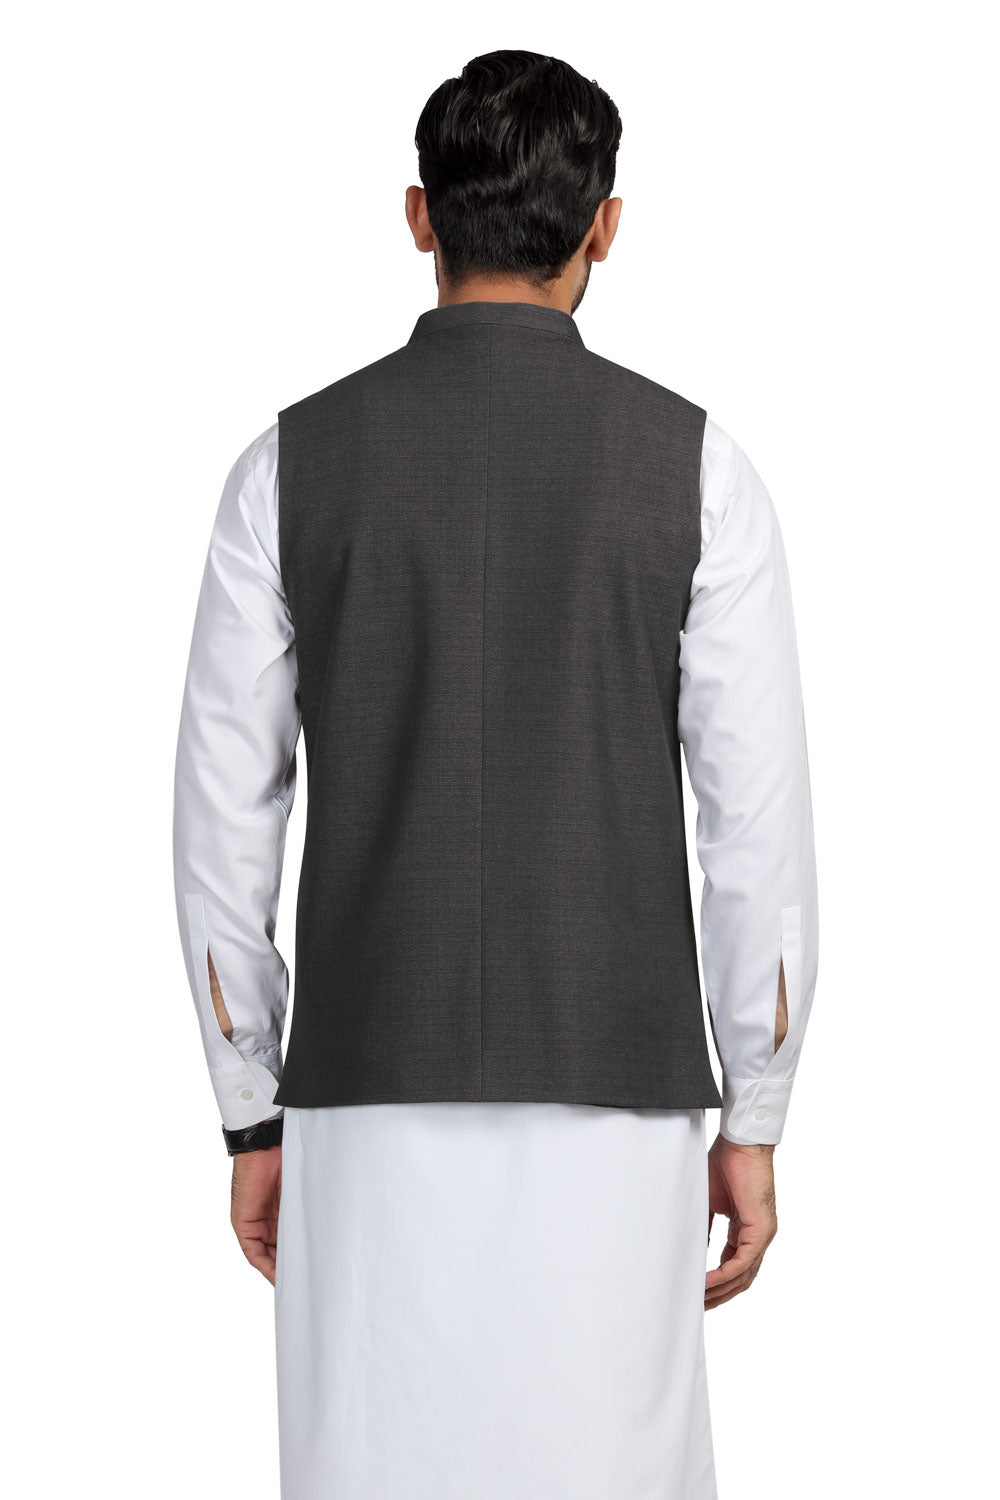 Charcoal Grey Waistcoat